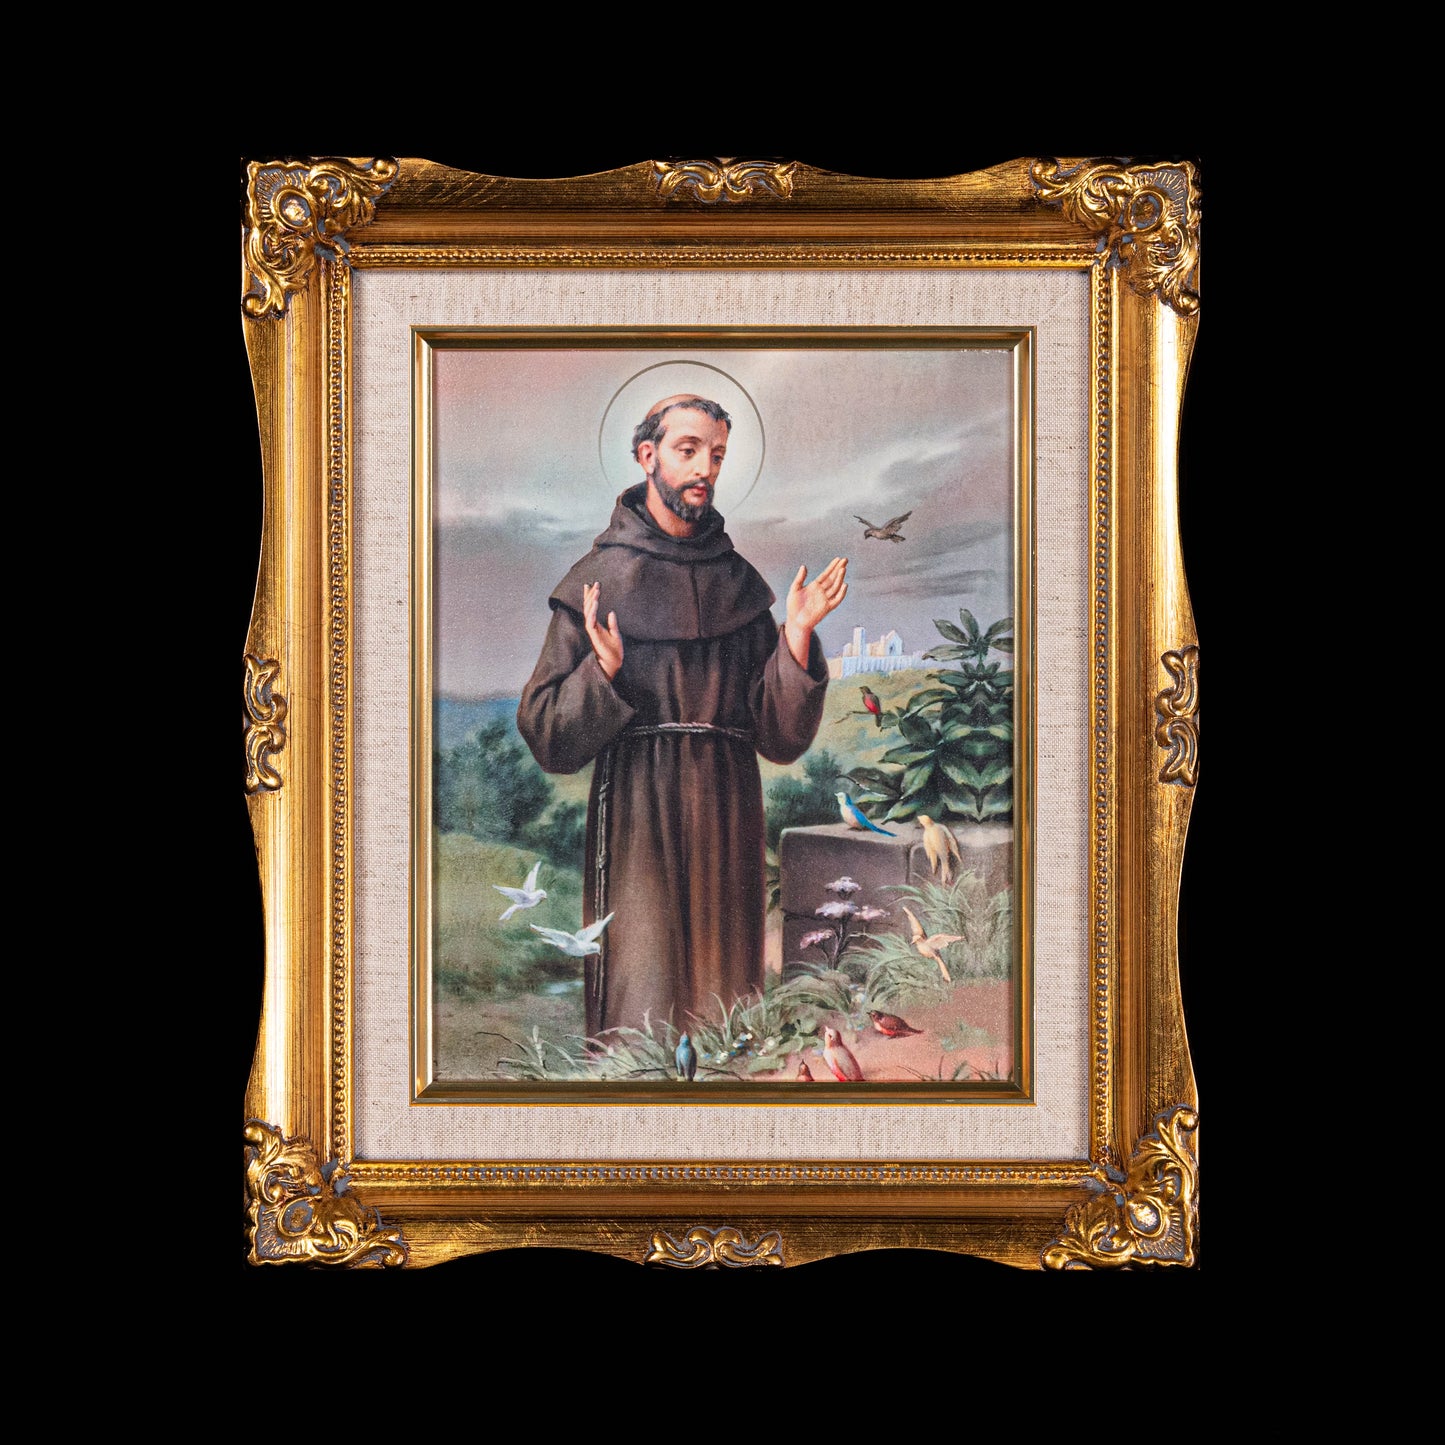 St. Francis Textured Art in Ornate Gold-Leaf Frame